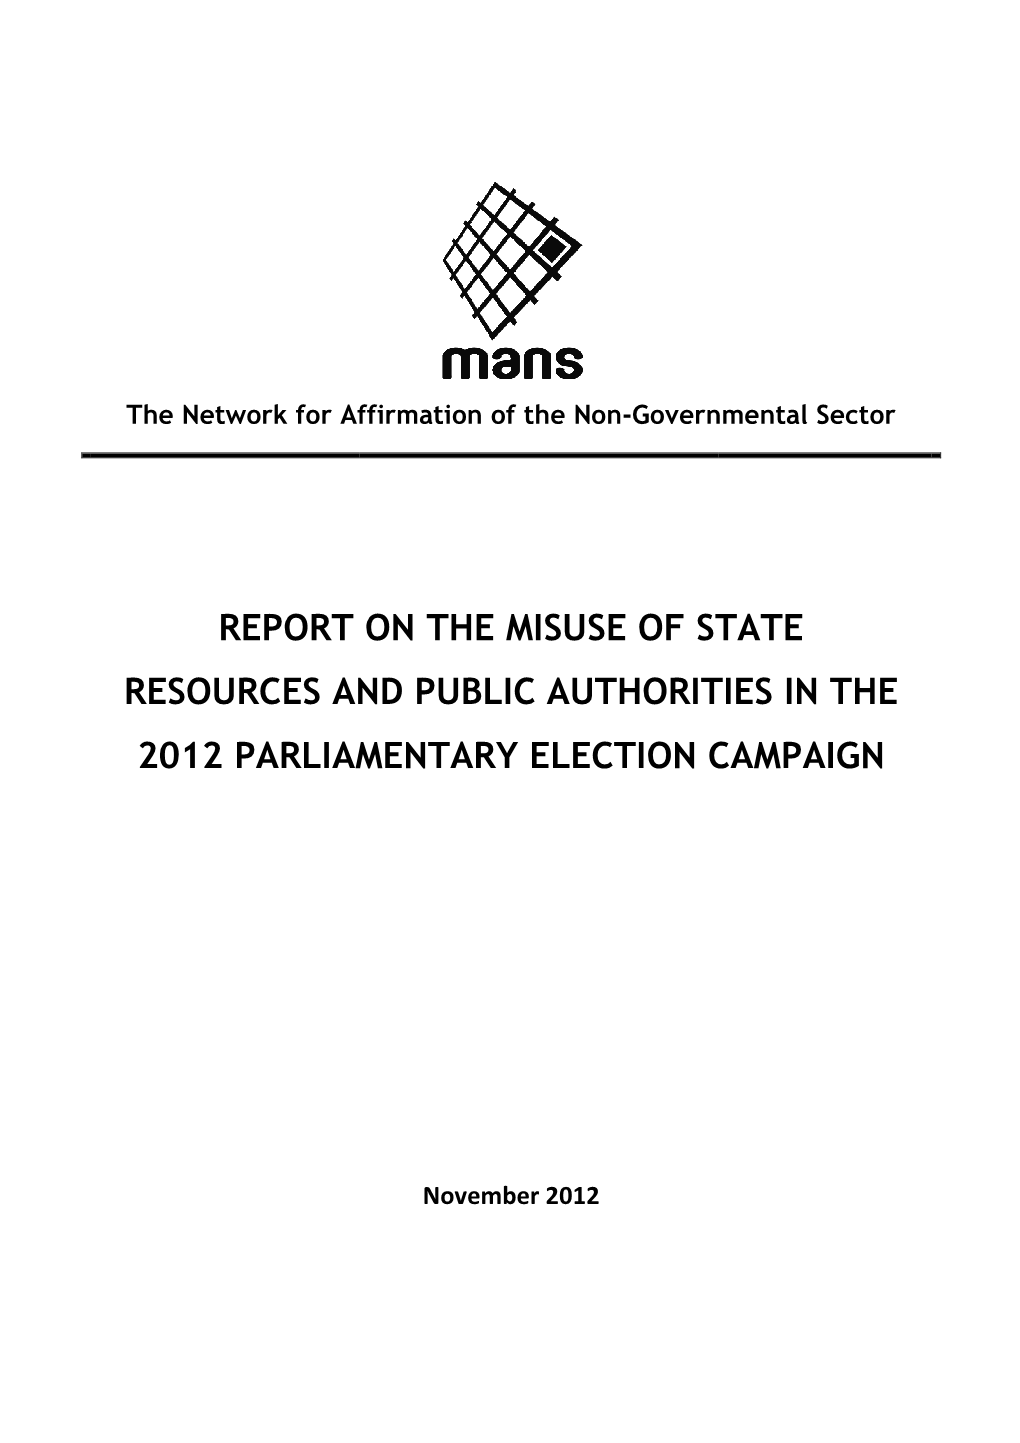 MANS's Report